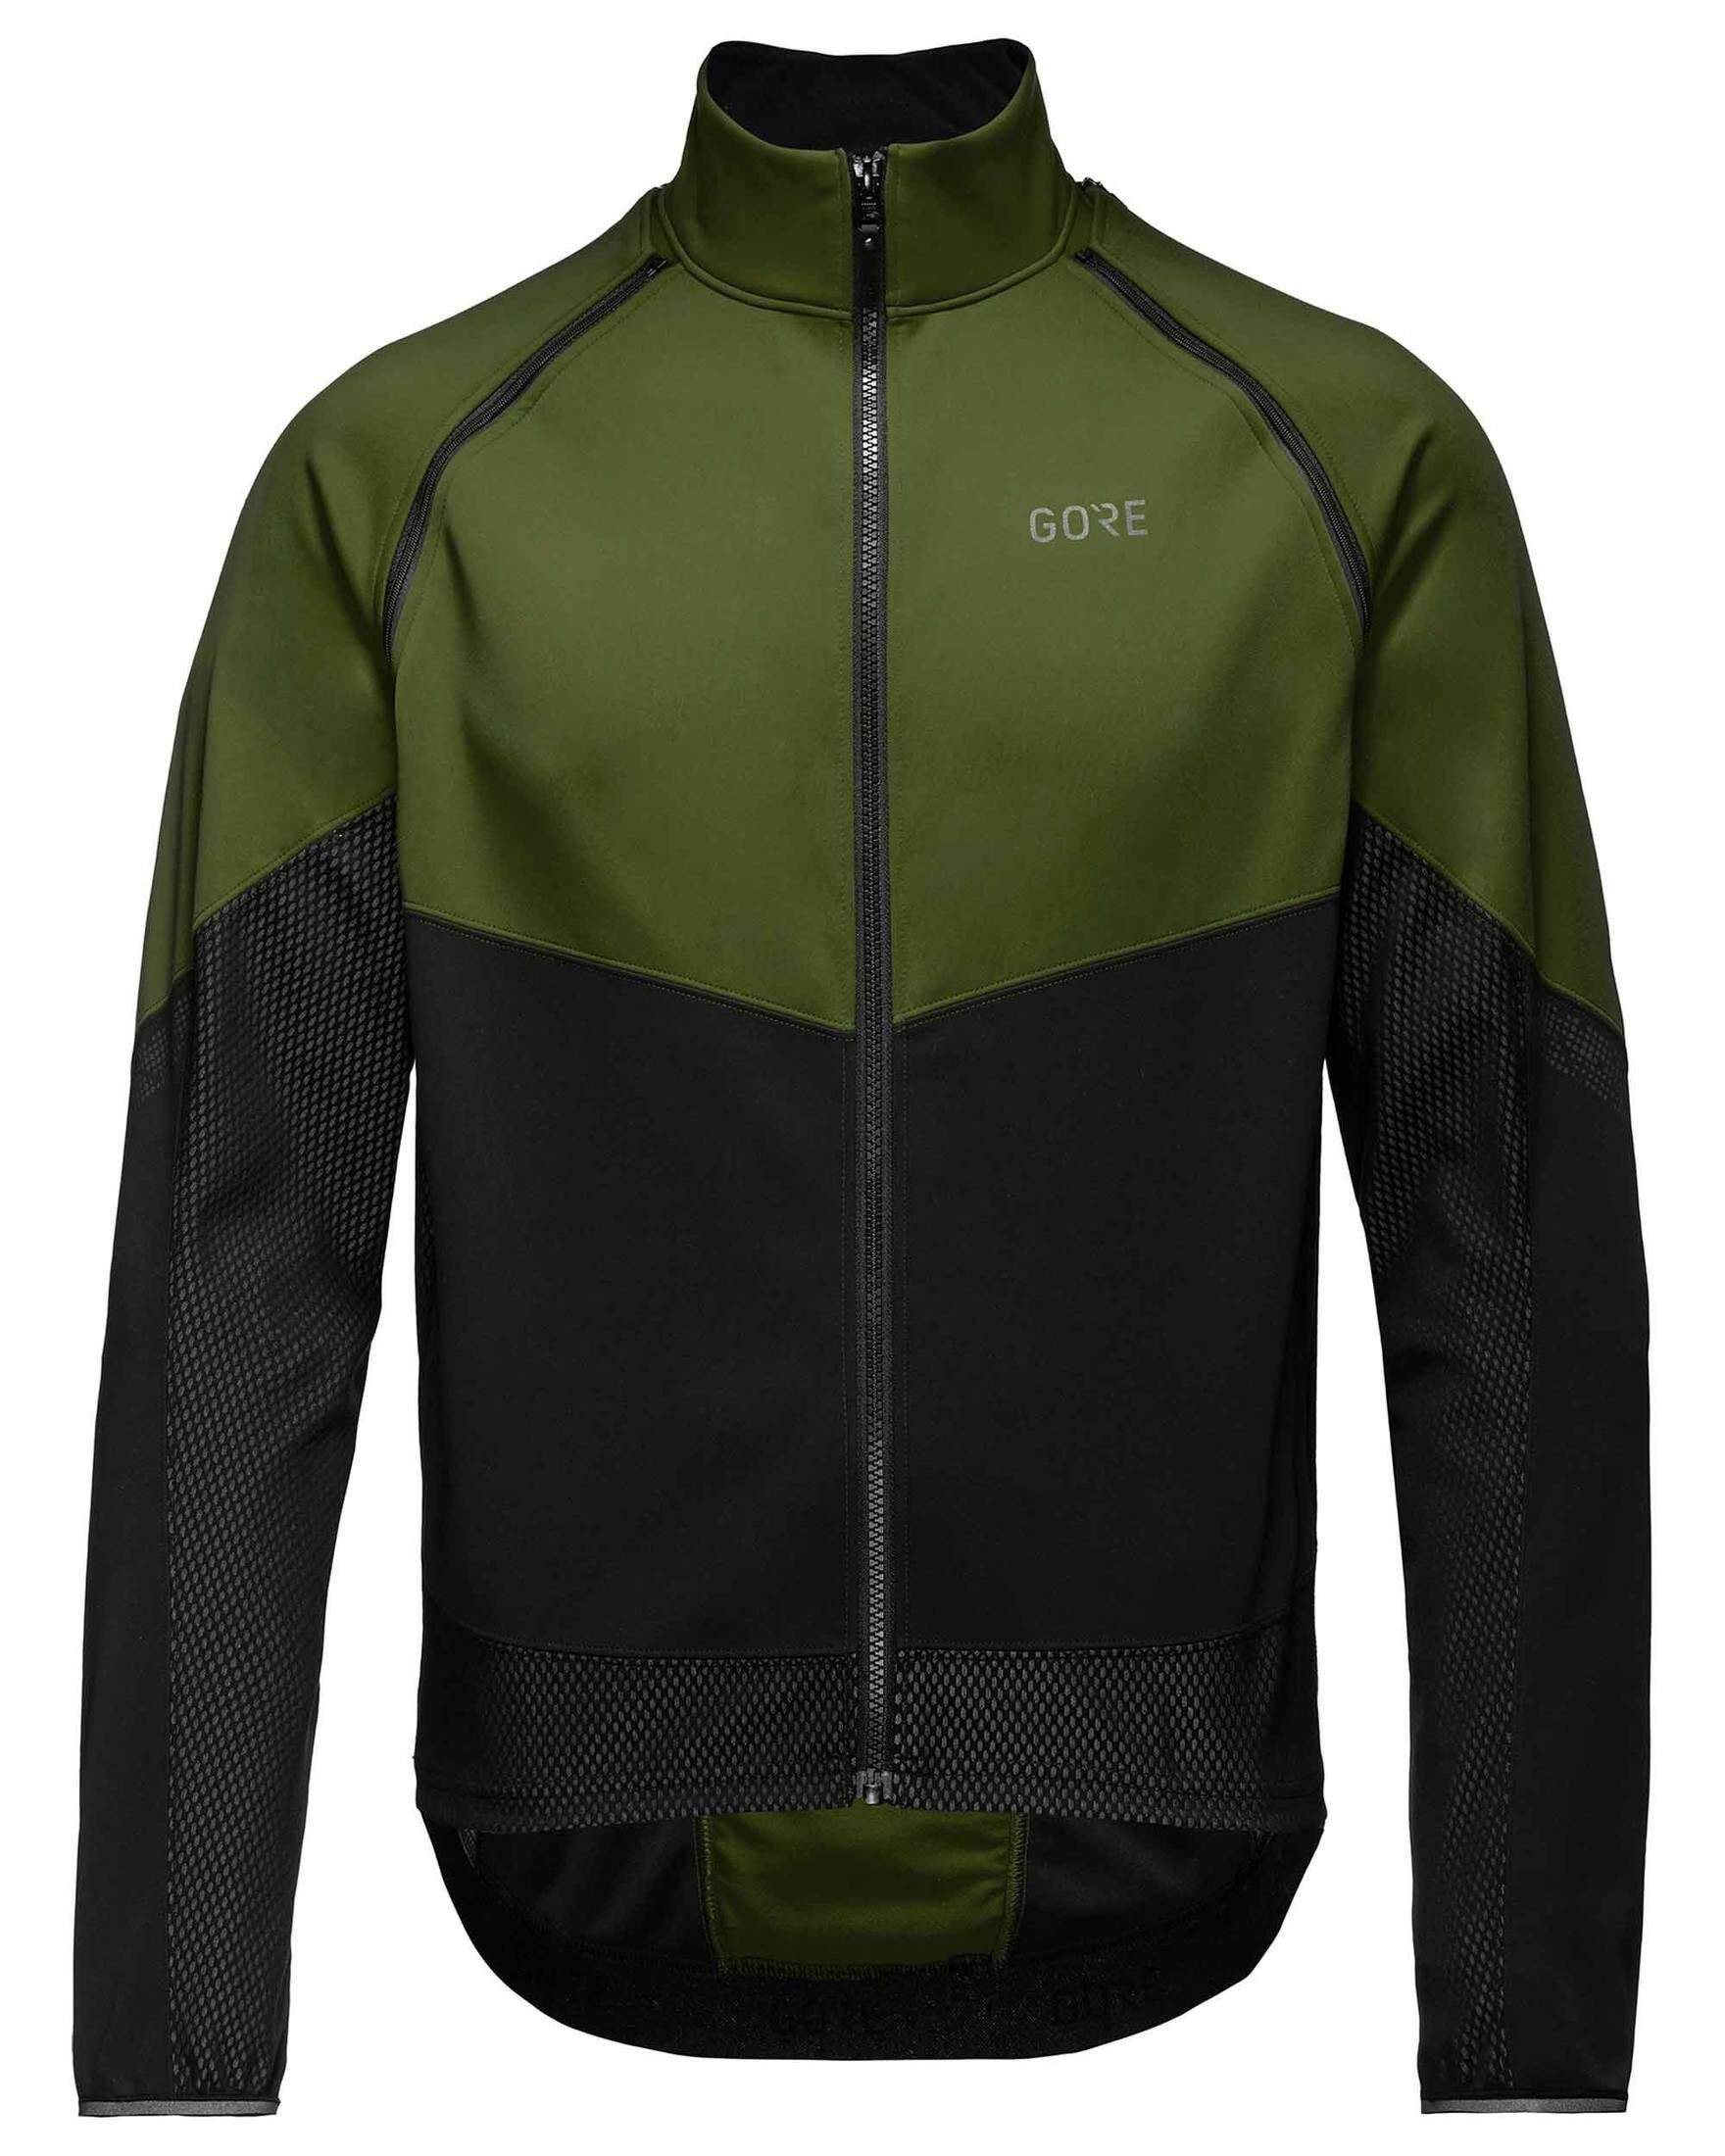 GORE® Wear Fahrradjacke Herren I Fahrradjacke grün/schwarz PHANTOM GTX (714)